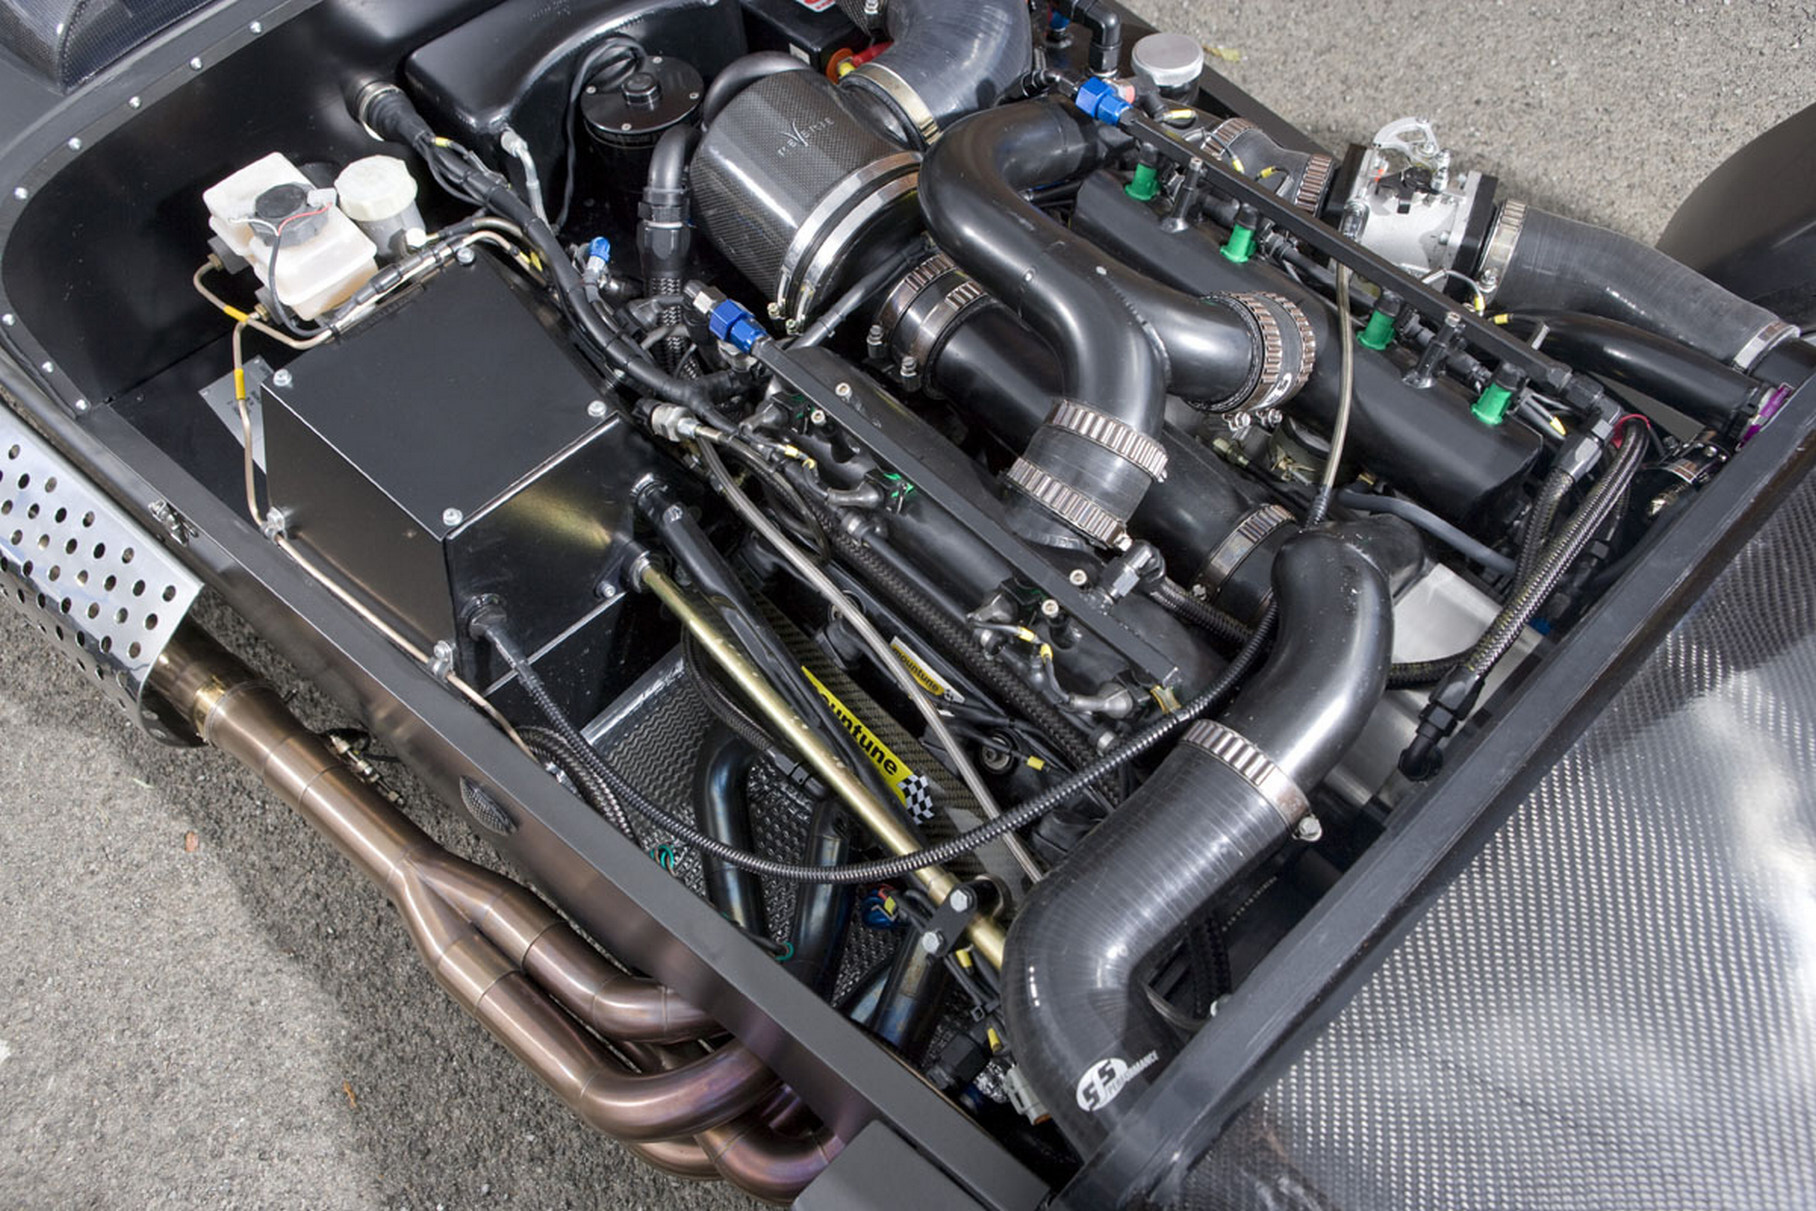 Двигатель RST V8 с компрессором Rotrex под капотом Caterham Levante